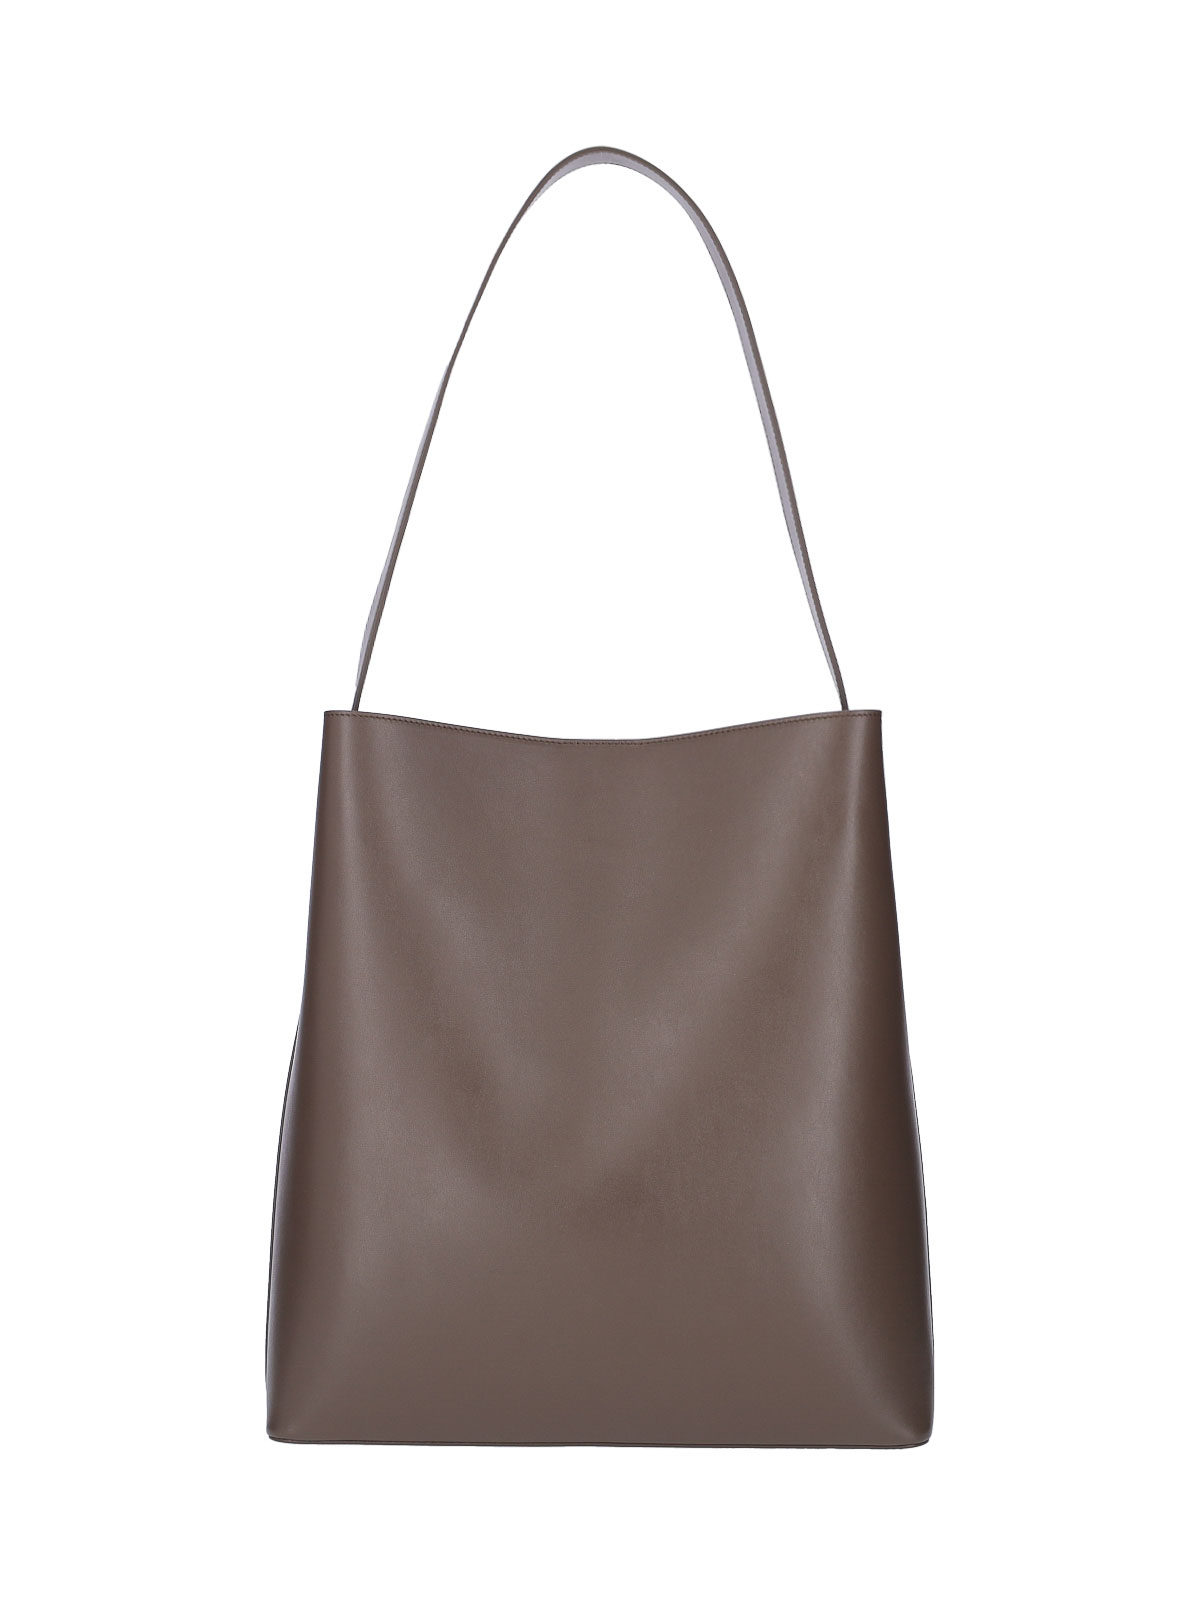 AESTHER EKME Flat Hobo Leather Shoulder Bag - Brown